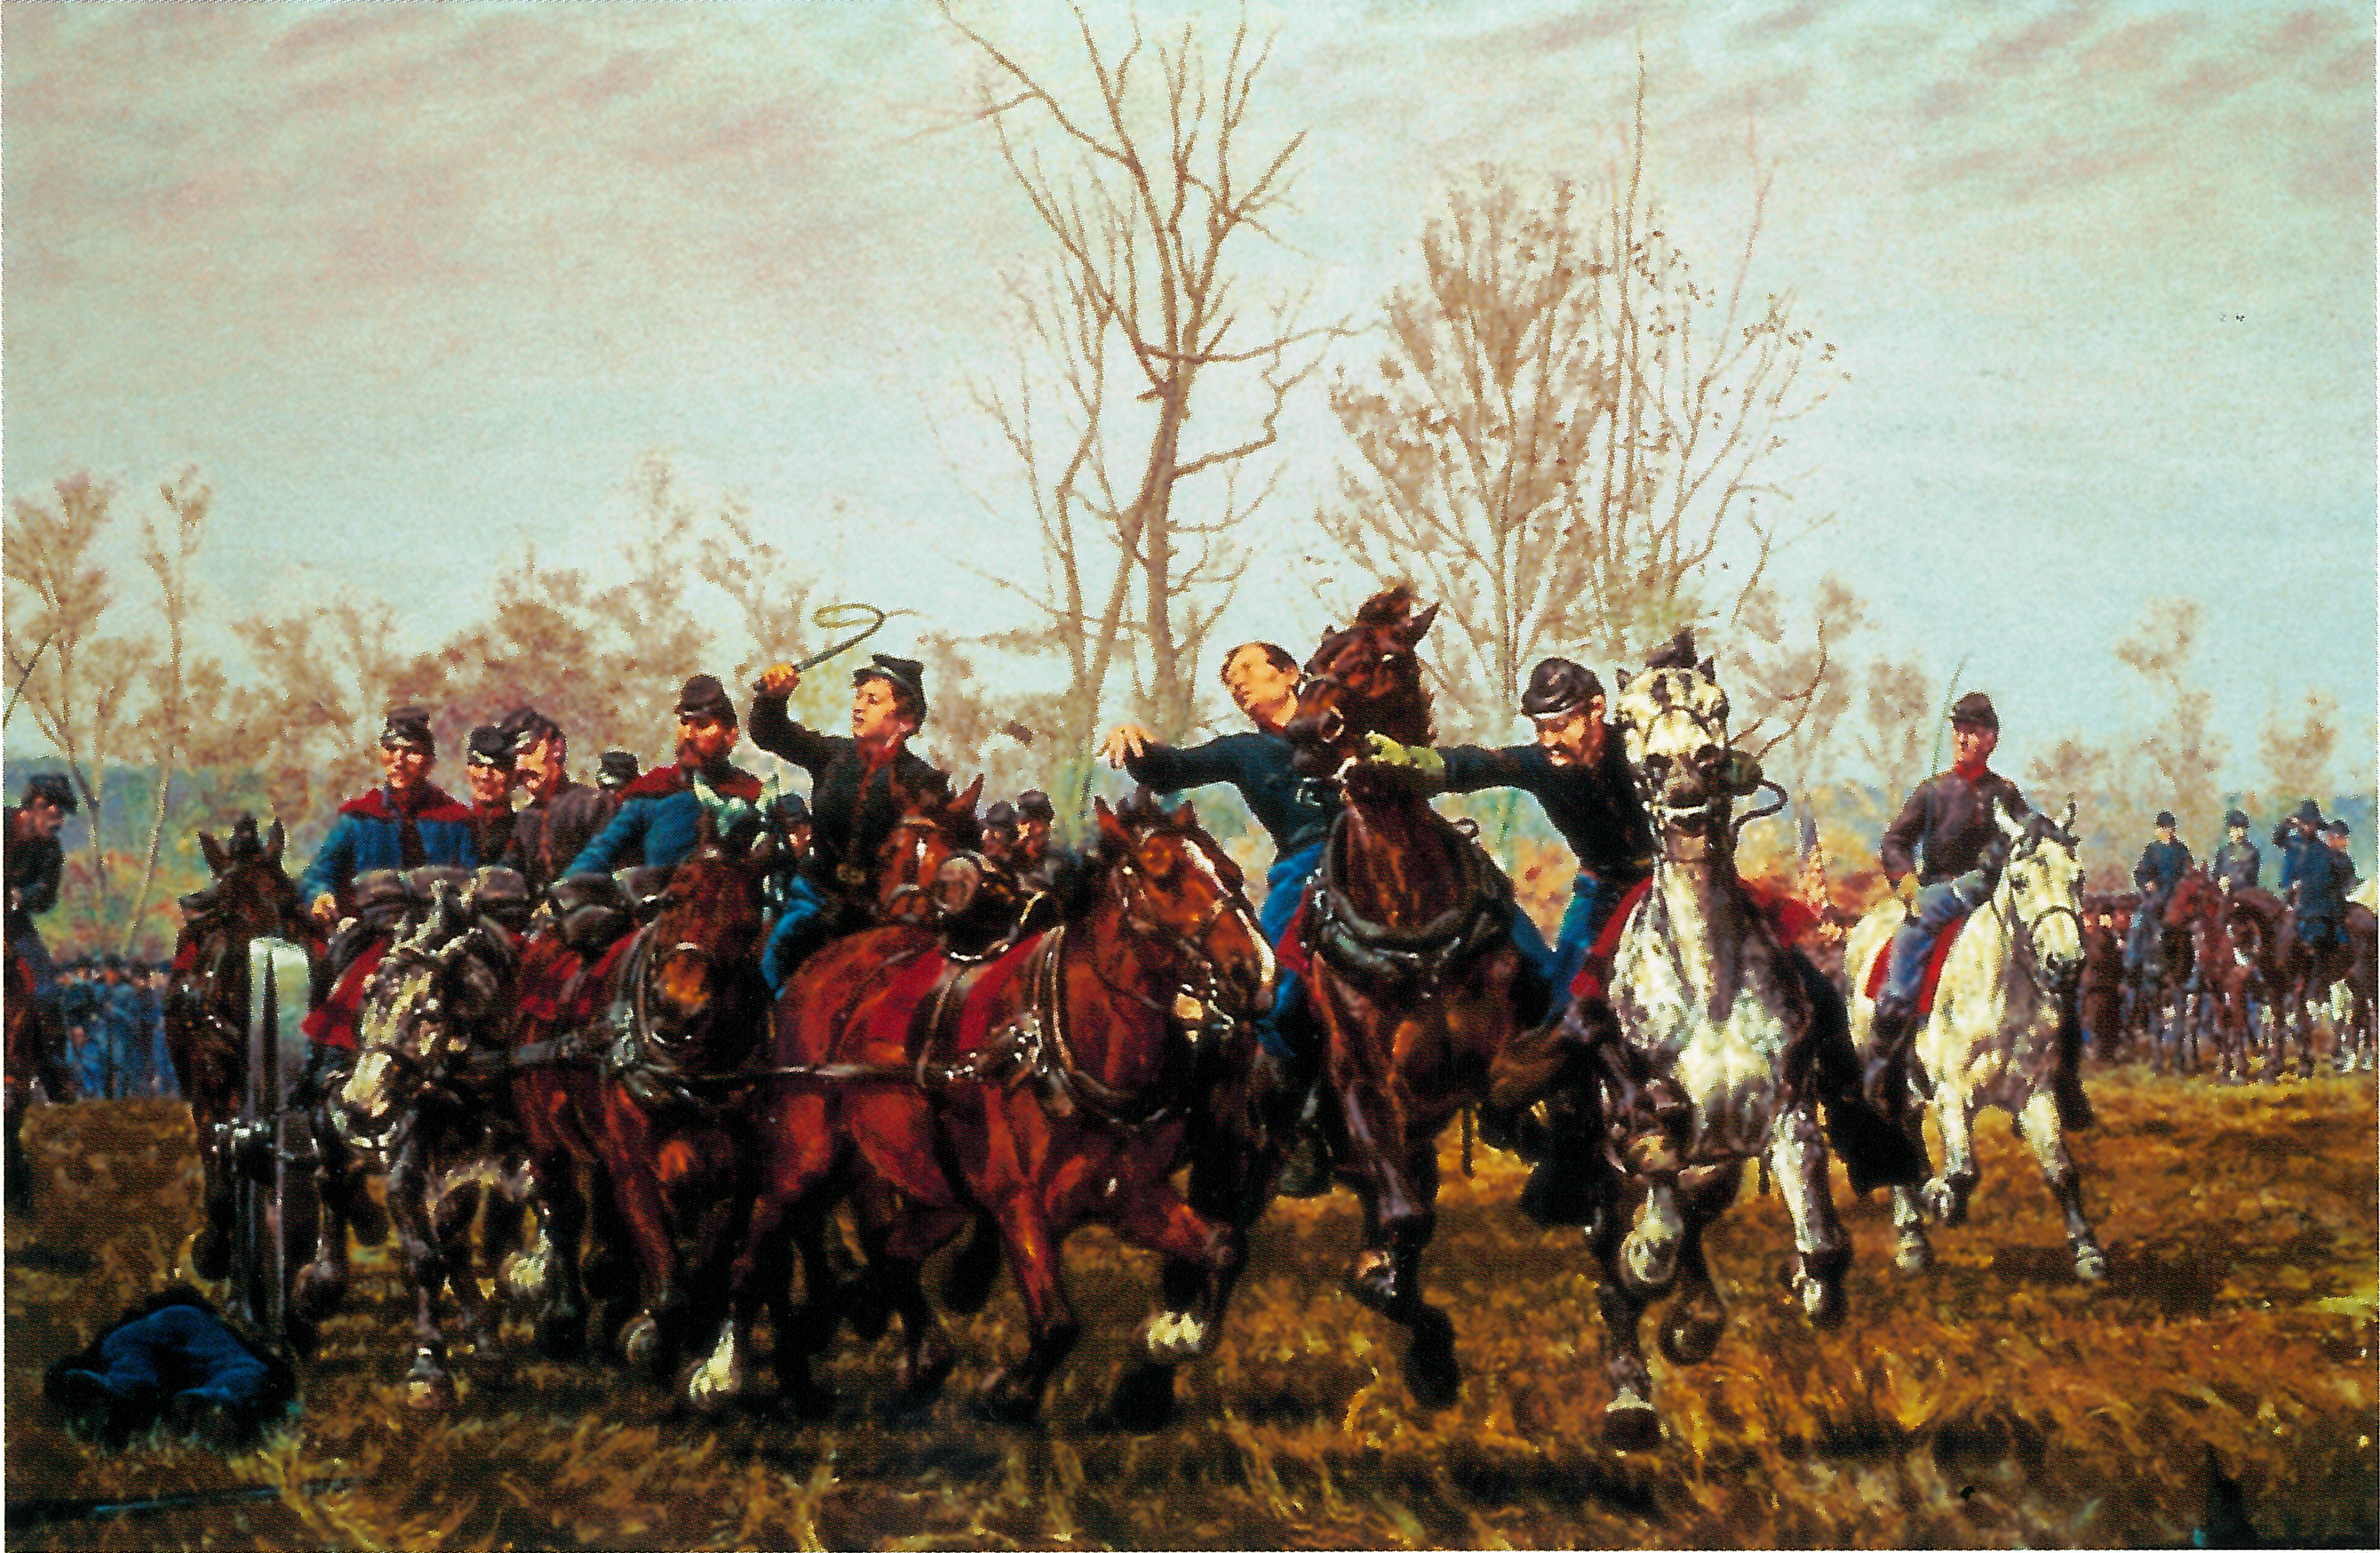 File:Battle of Gettysburg, by